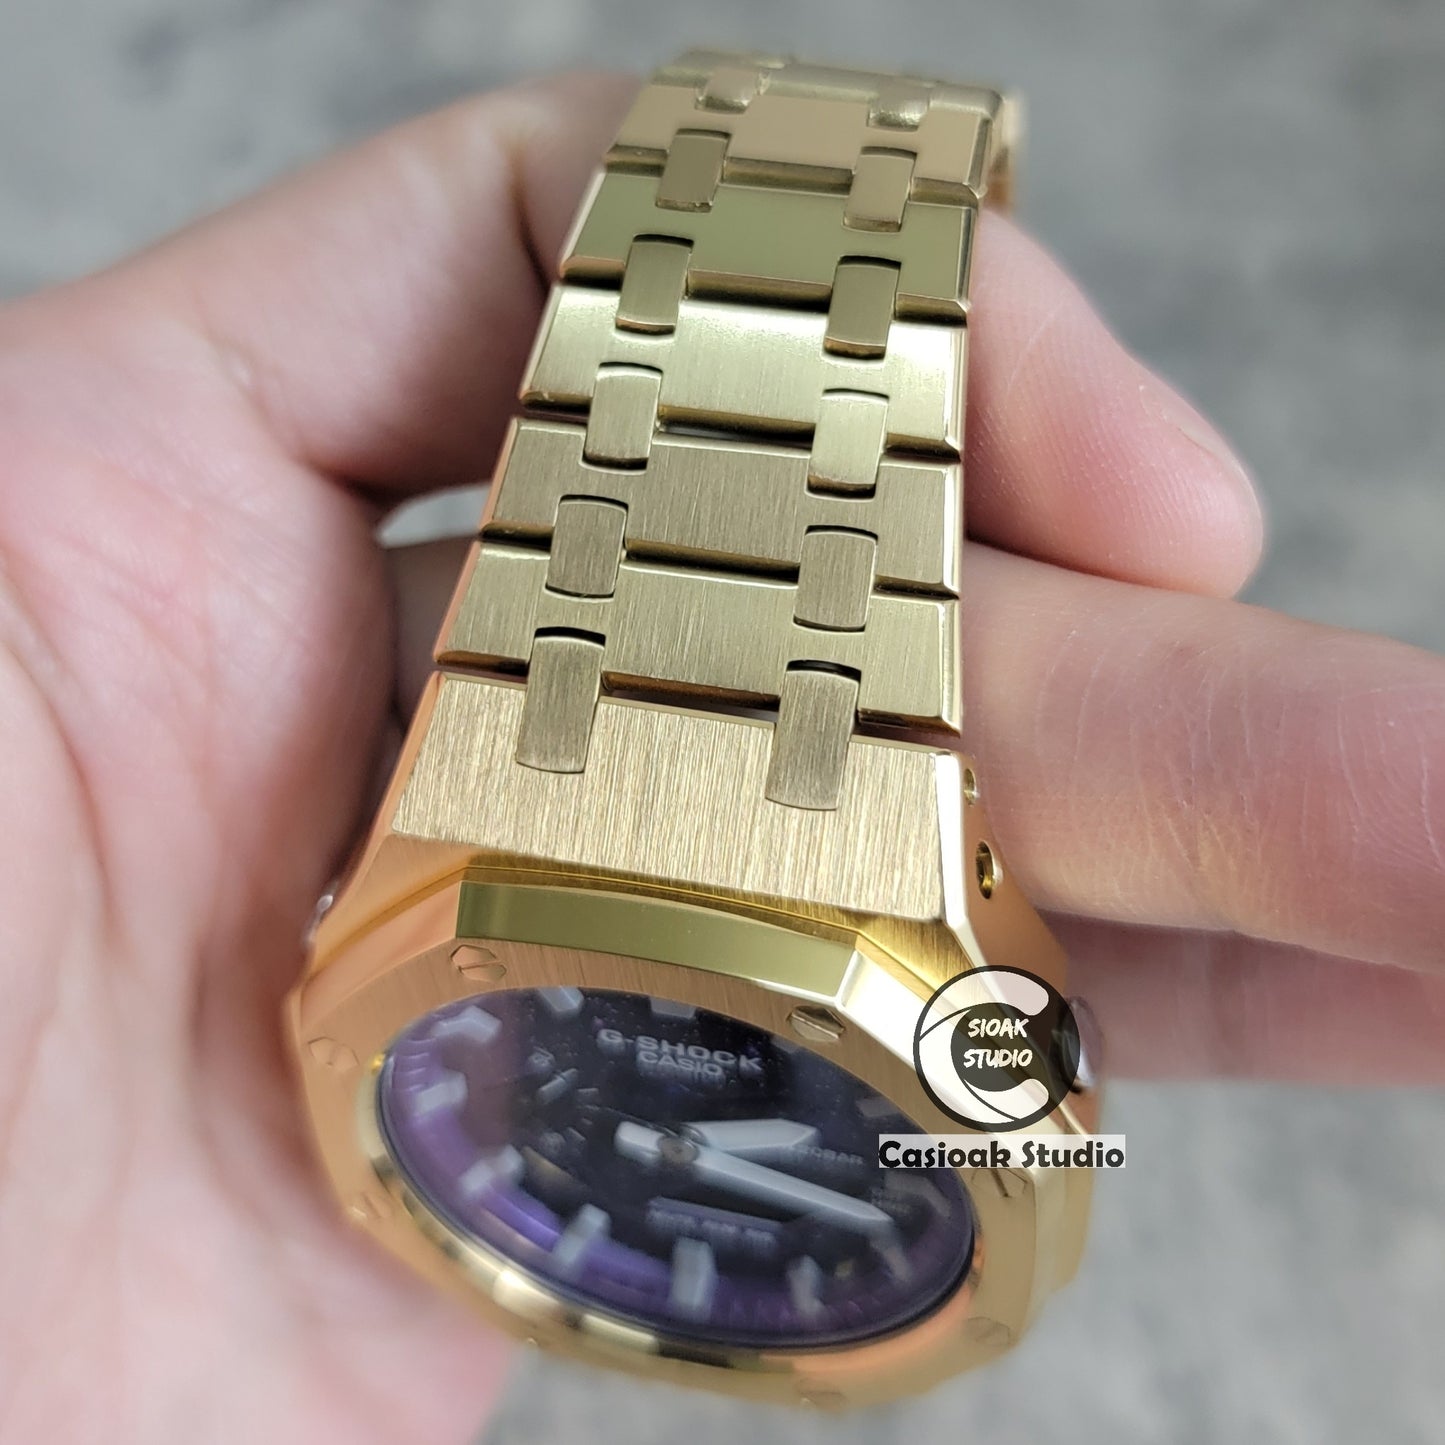 Casioak Mod Watch Gold Case Metal Strap Purple Silver Time Mark Purple Dial 44mm - Casioak Studio